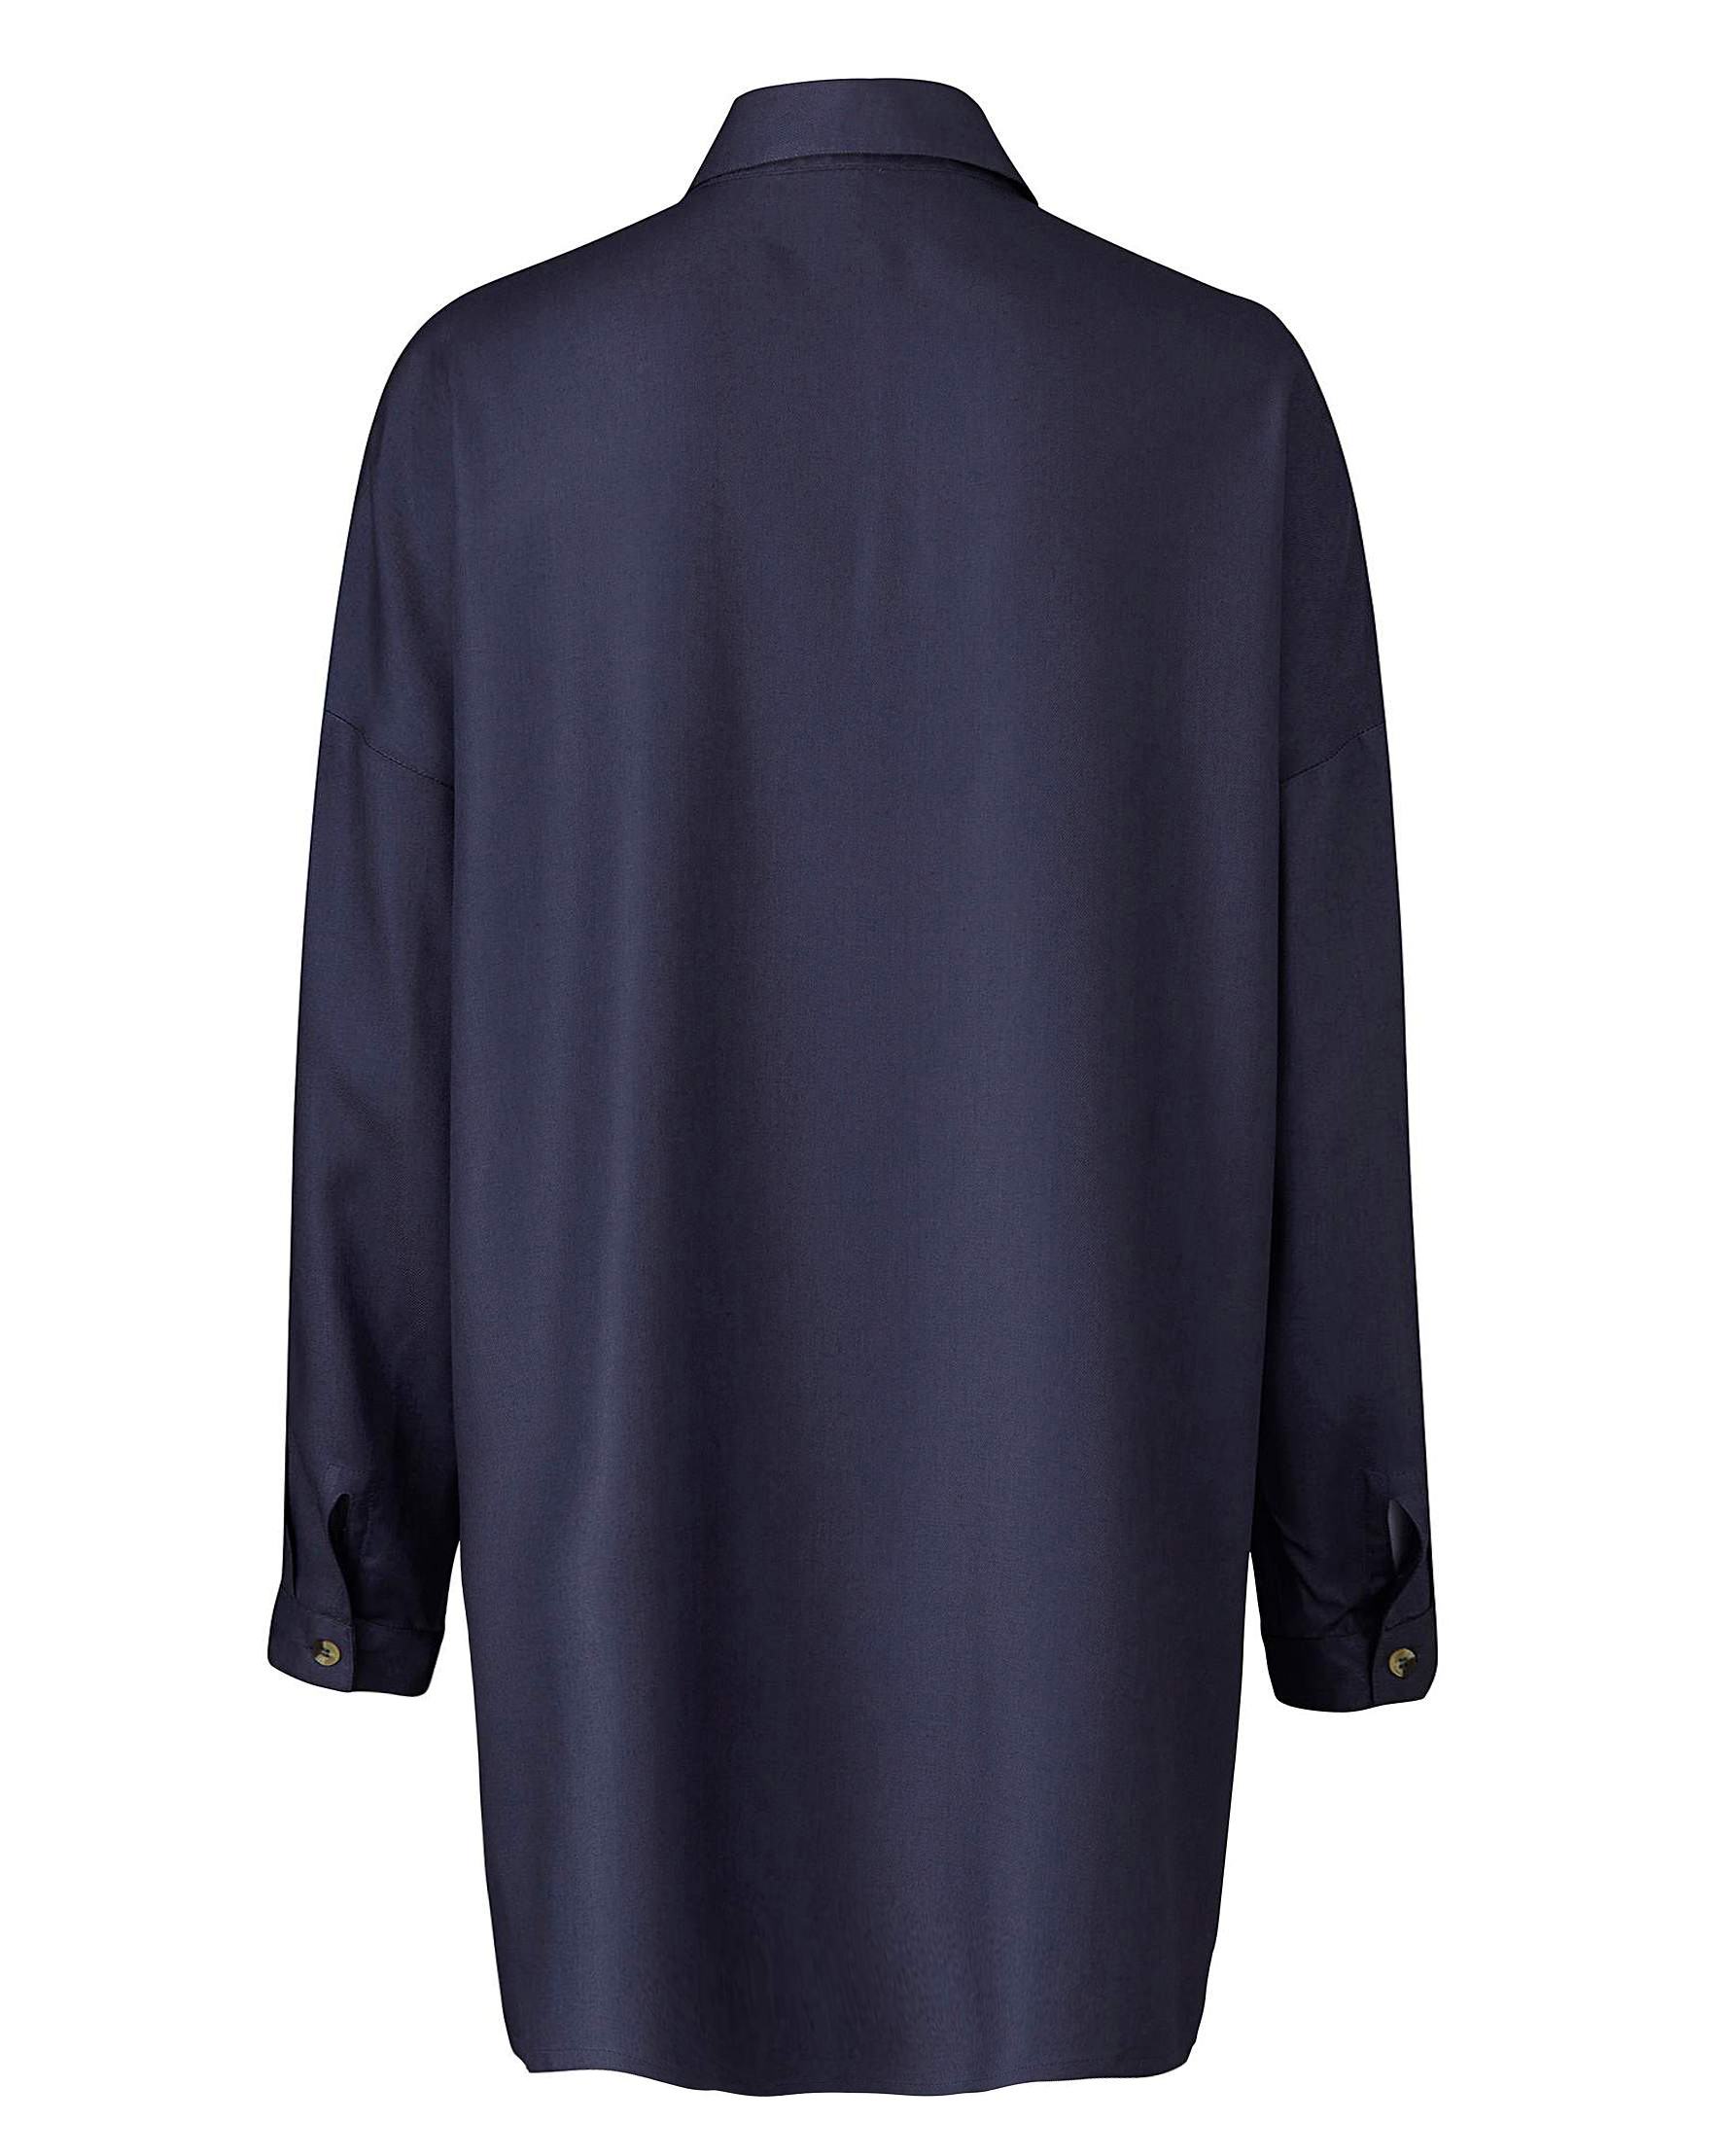 Capsule - - Capsule DARK-GREY Oblong Hem Shirt - Size 10 to 32